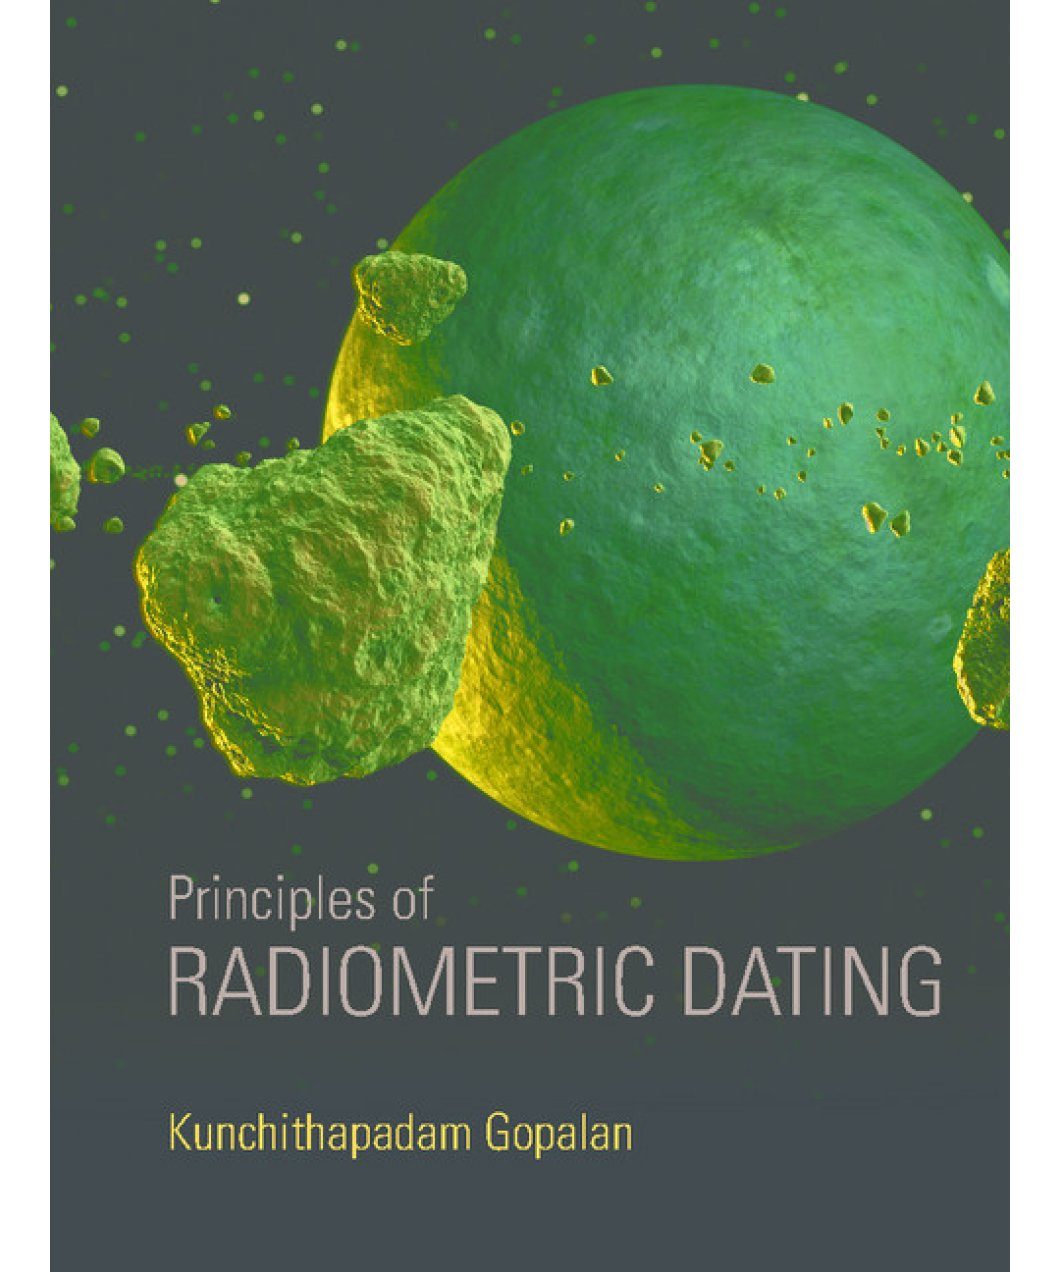 Dating moon radiometric rocks of Radiometric dating